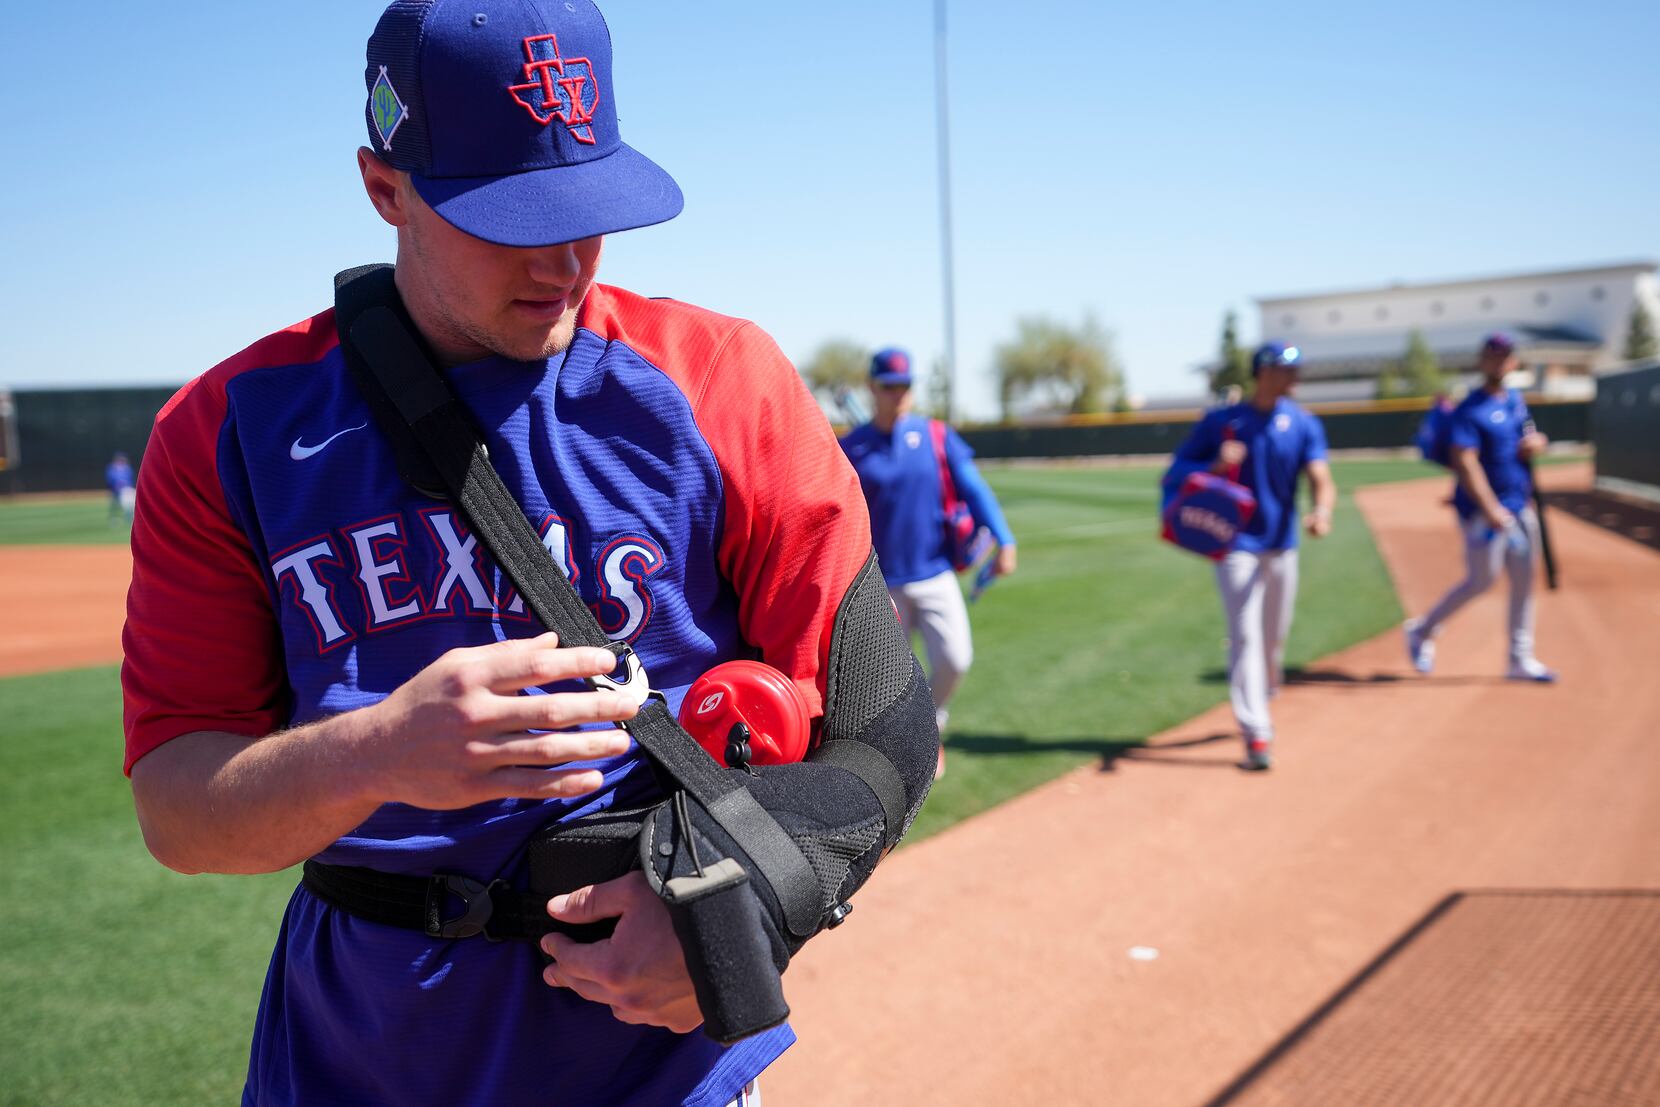 Josh Jung injury: Texas Rangers third base prospect has stress